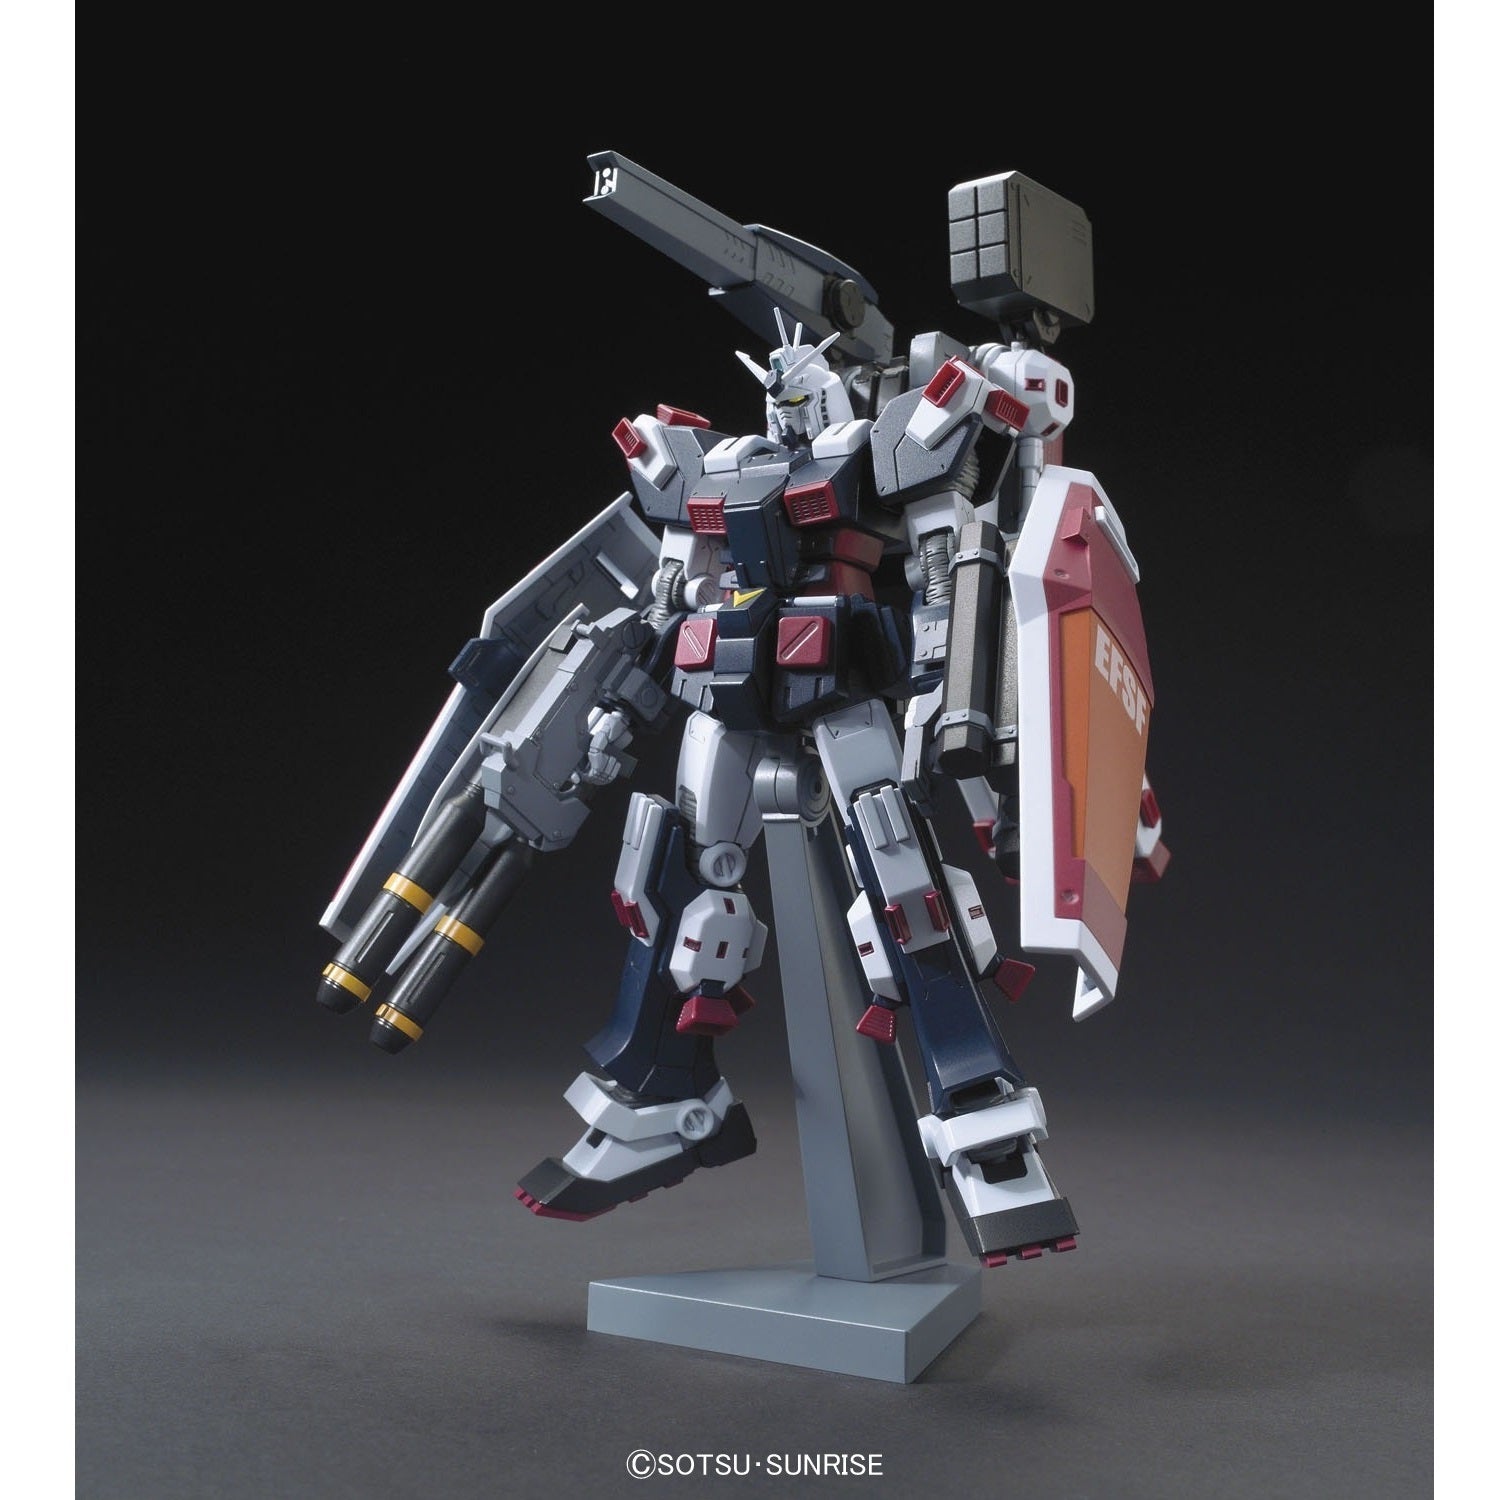 Gunpla HG 1/144 Full Armor Gundam (Gundam Thunderbolt Ver.)-Bandai-Ace Cards & Collectibles